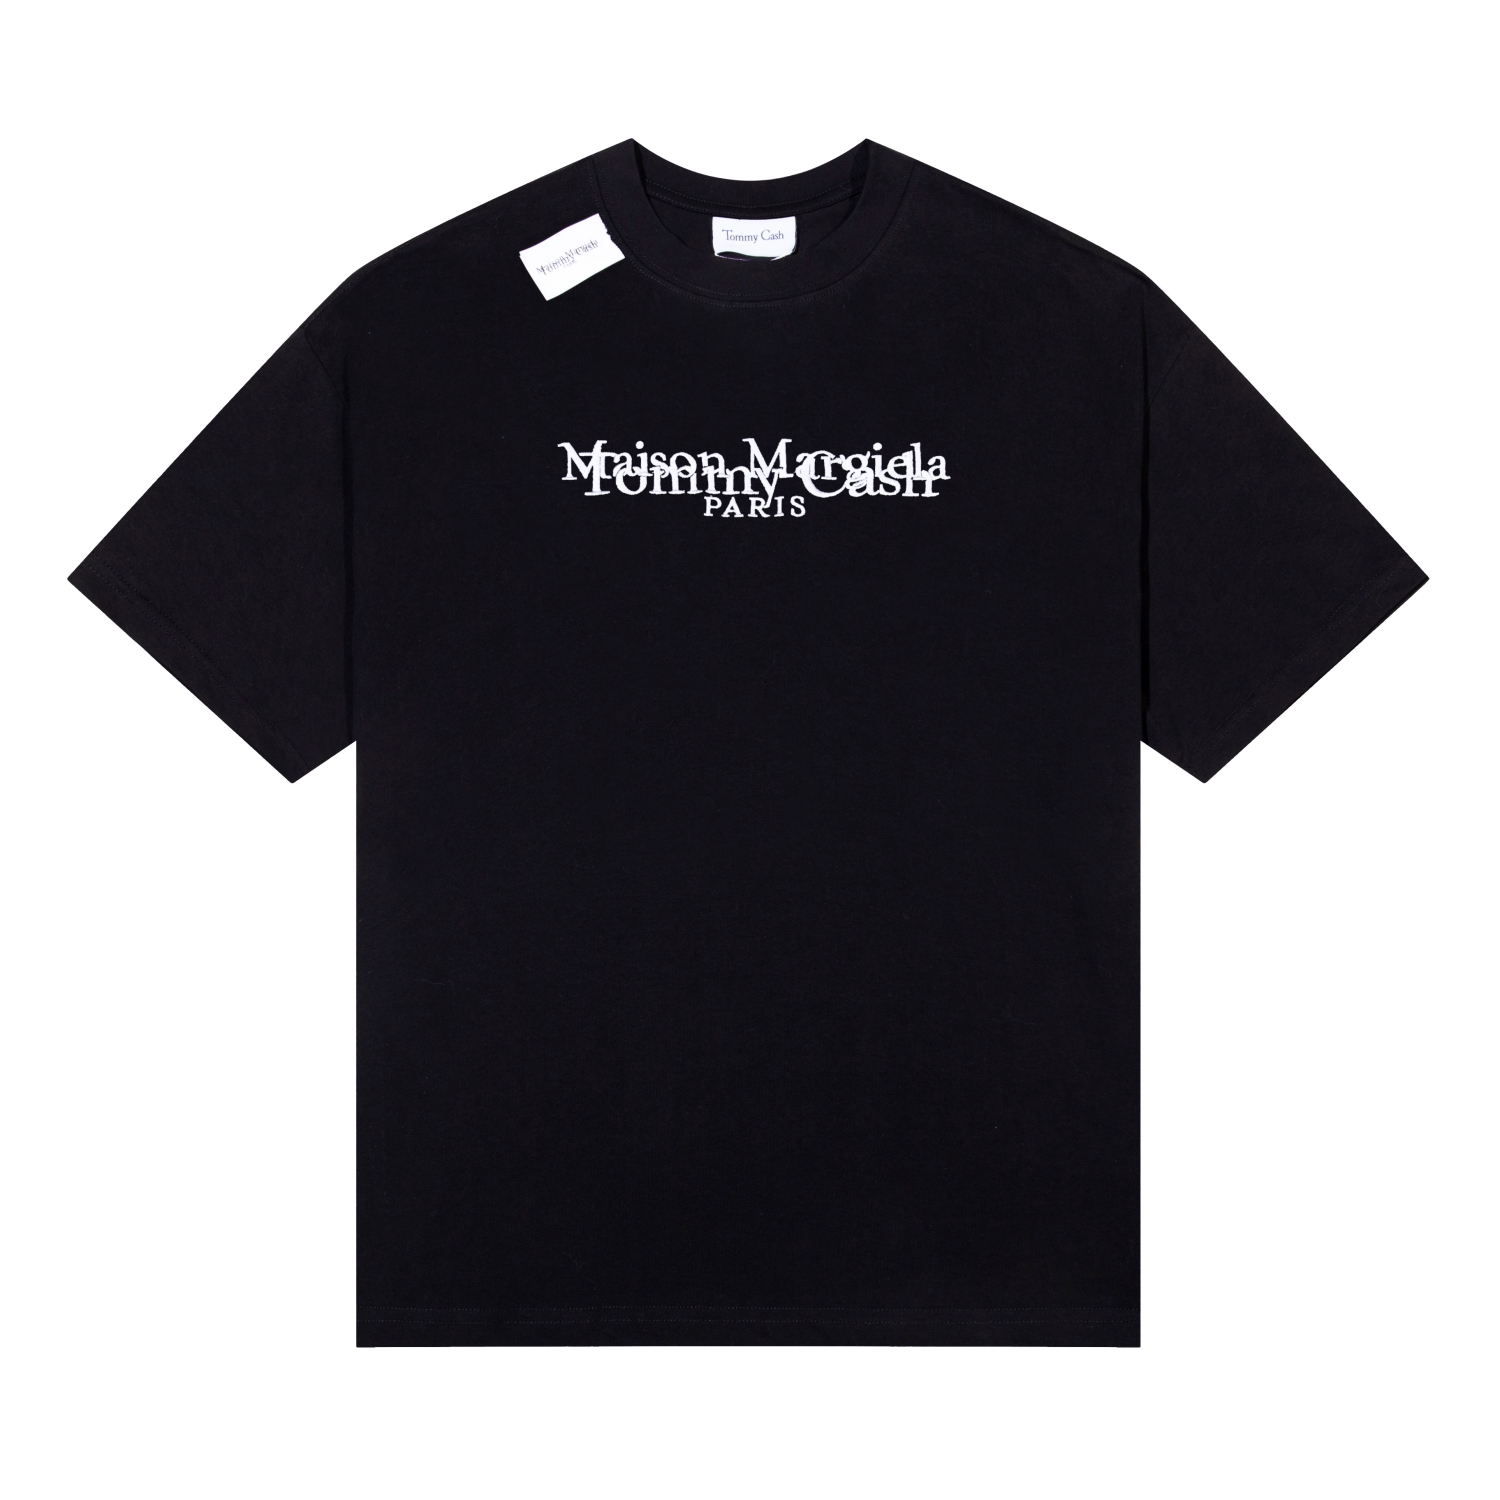 Balenciaga Clothing T-Shirt Black Printing Unisex Combed Cotton Short Sleeve